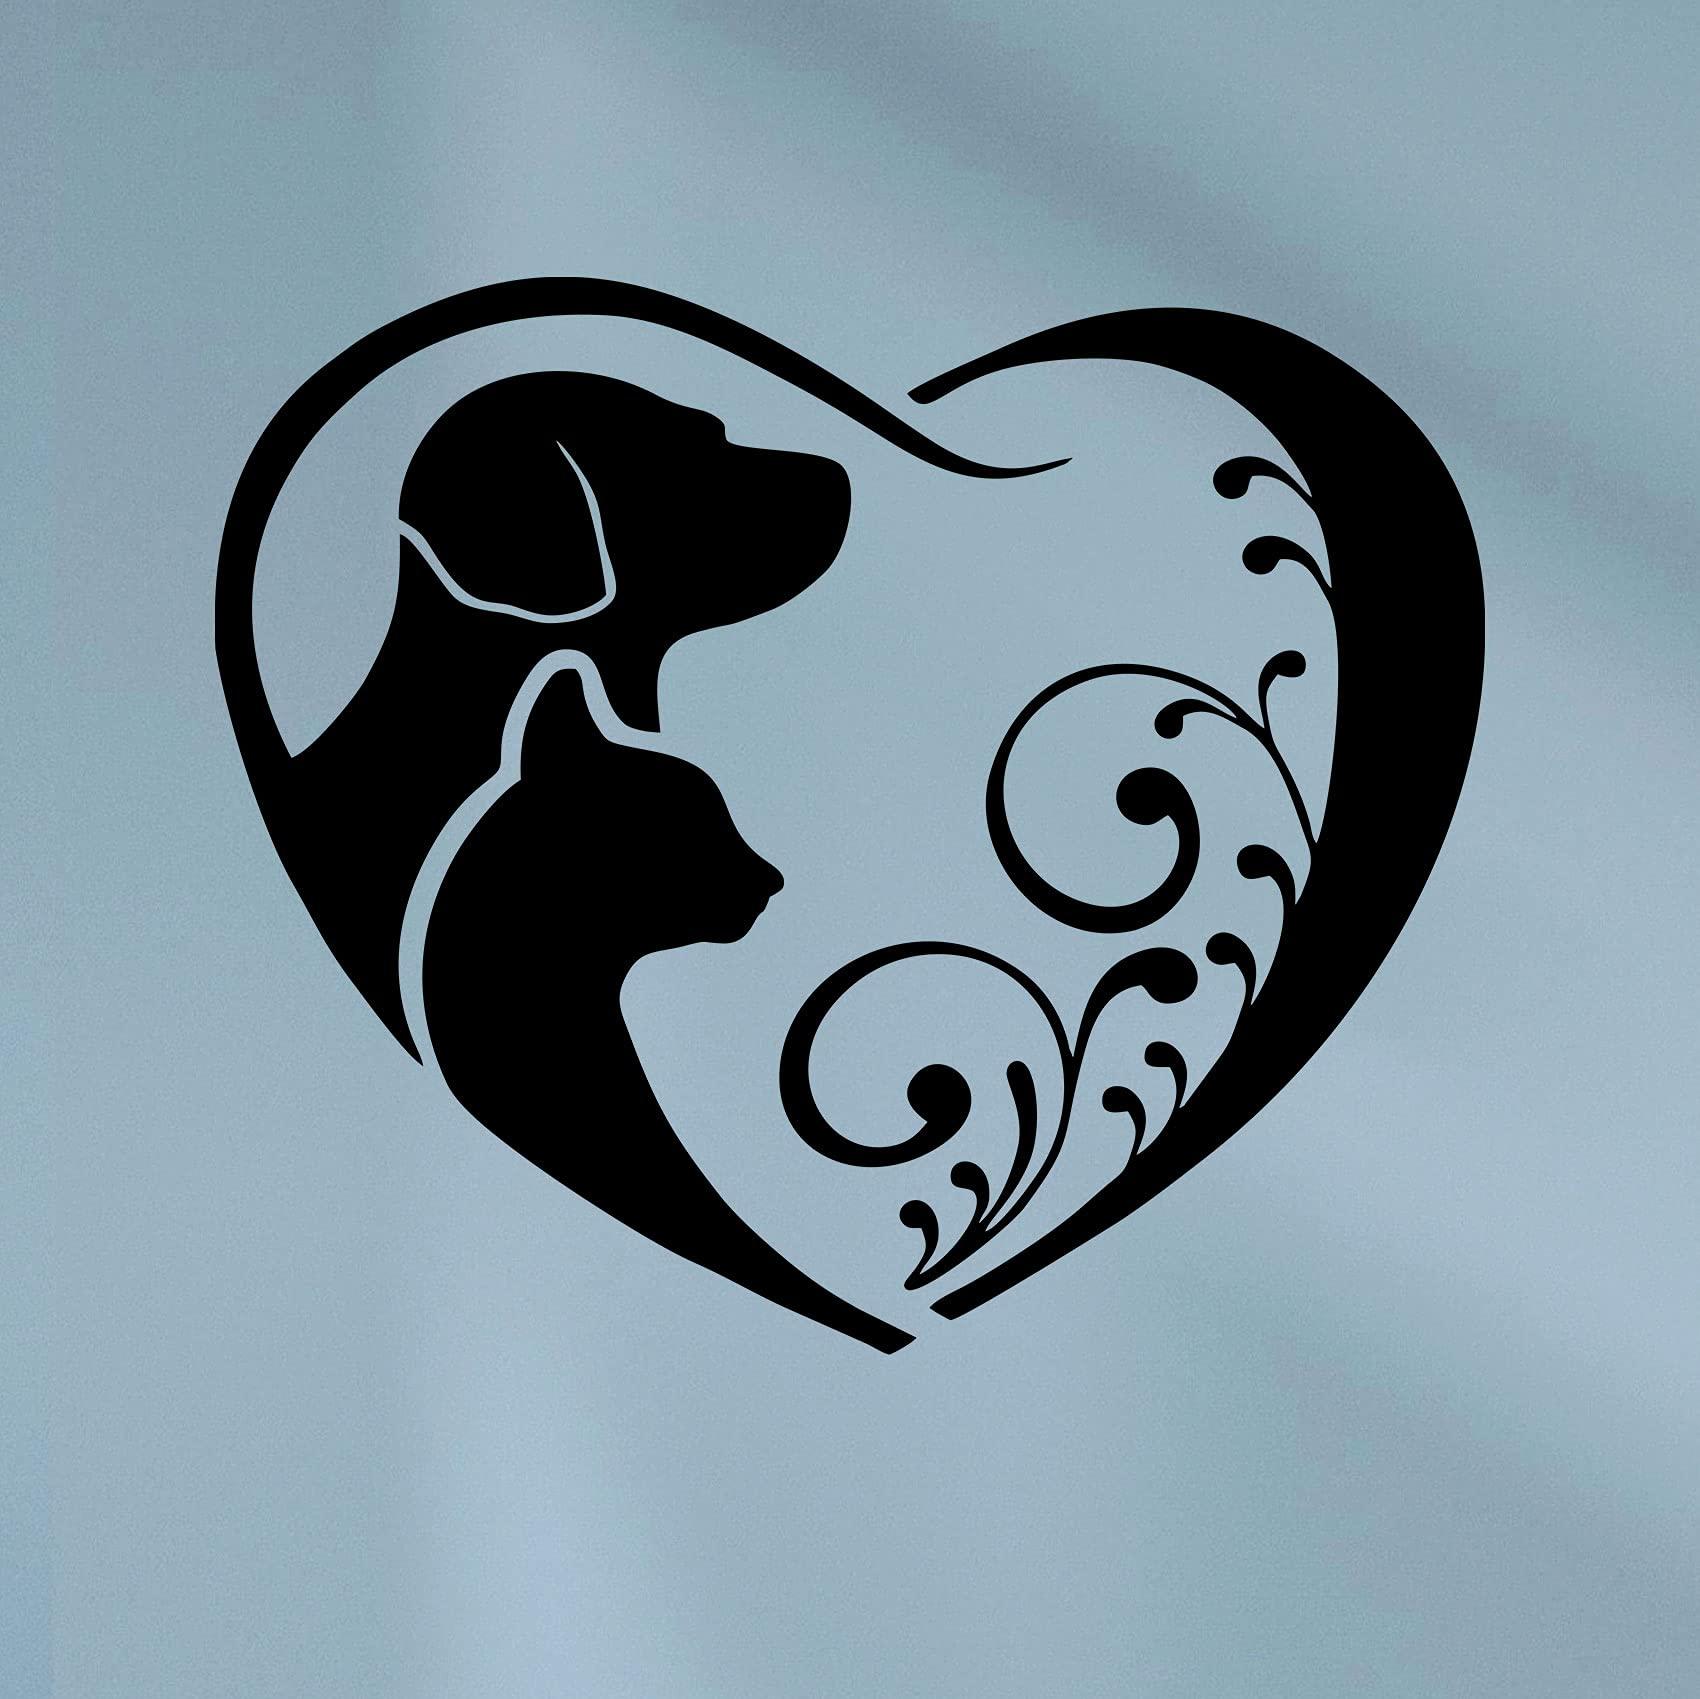 Amazon Jingbelus Dog And Cat Heart Shape Silhouette Wall